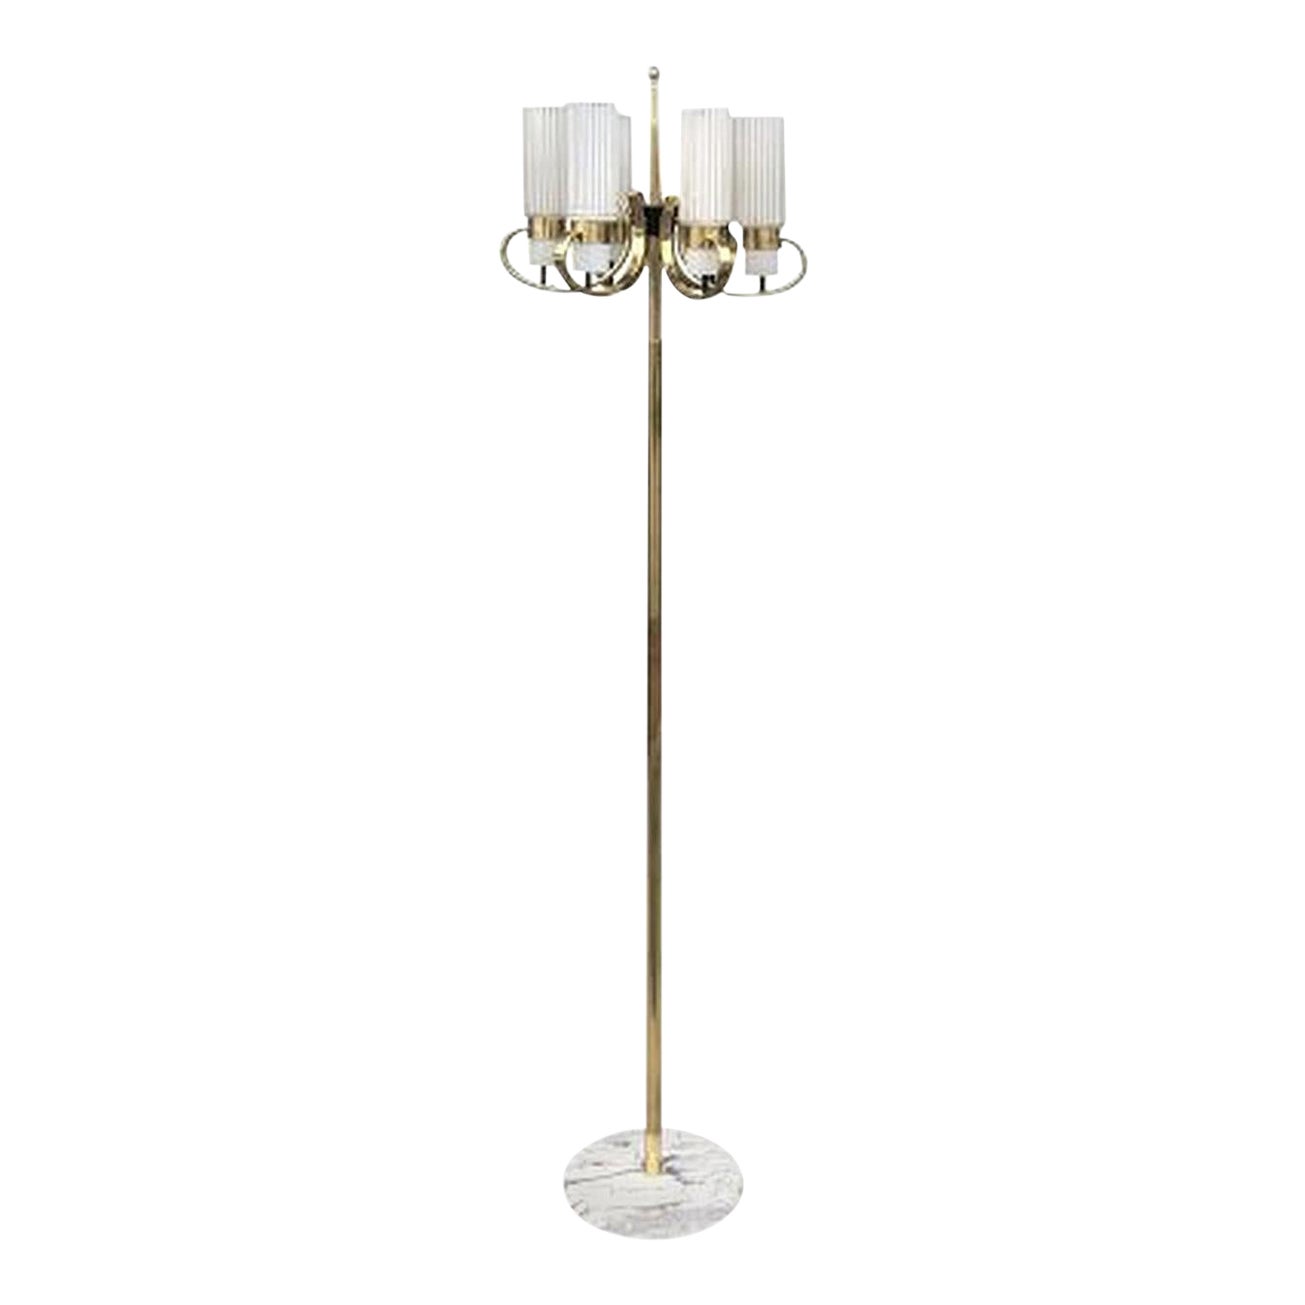 20th Century Italian Marble Floor Lamp - Vintage Light Attributed to Stilnovo